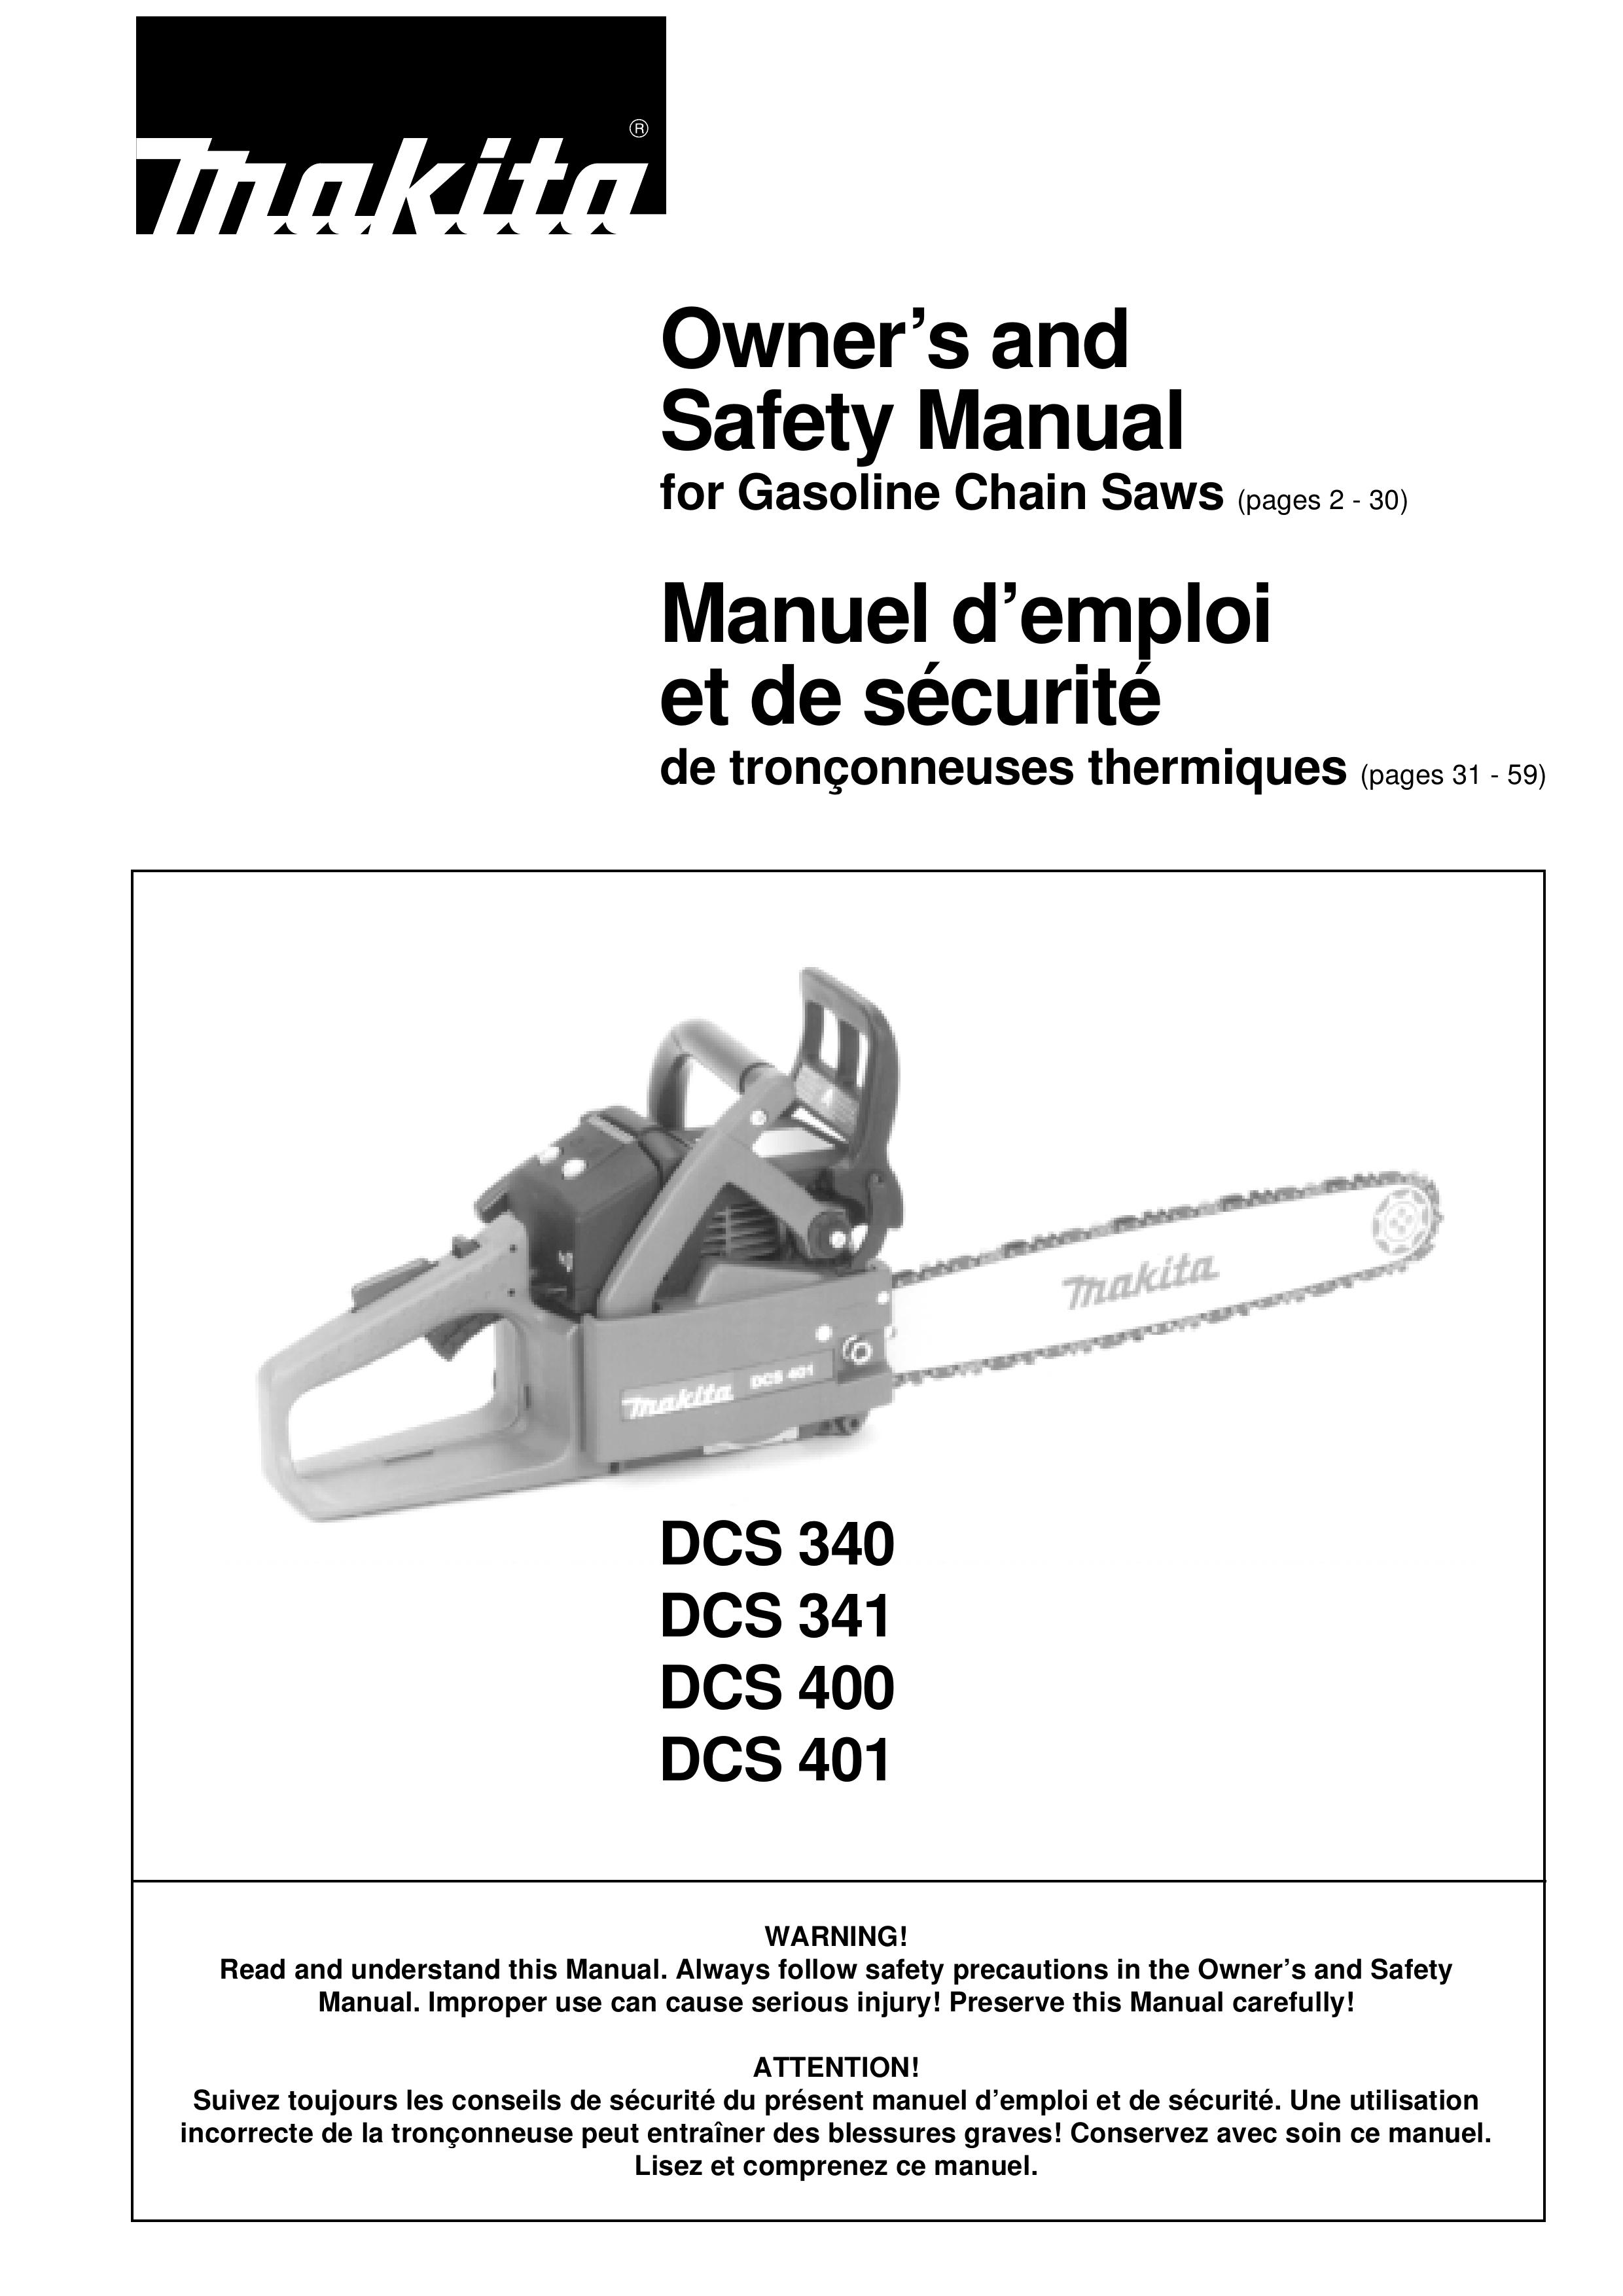 Makita DCS 400 Chainsaw User Manual